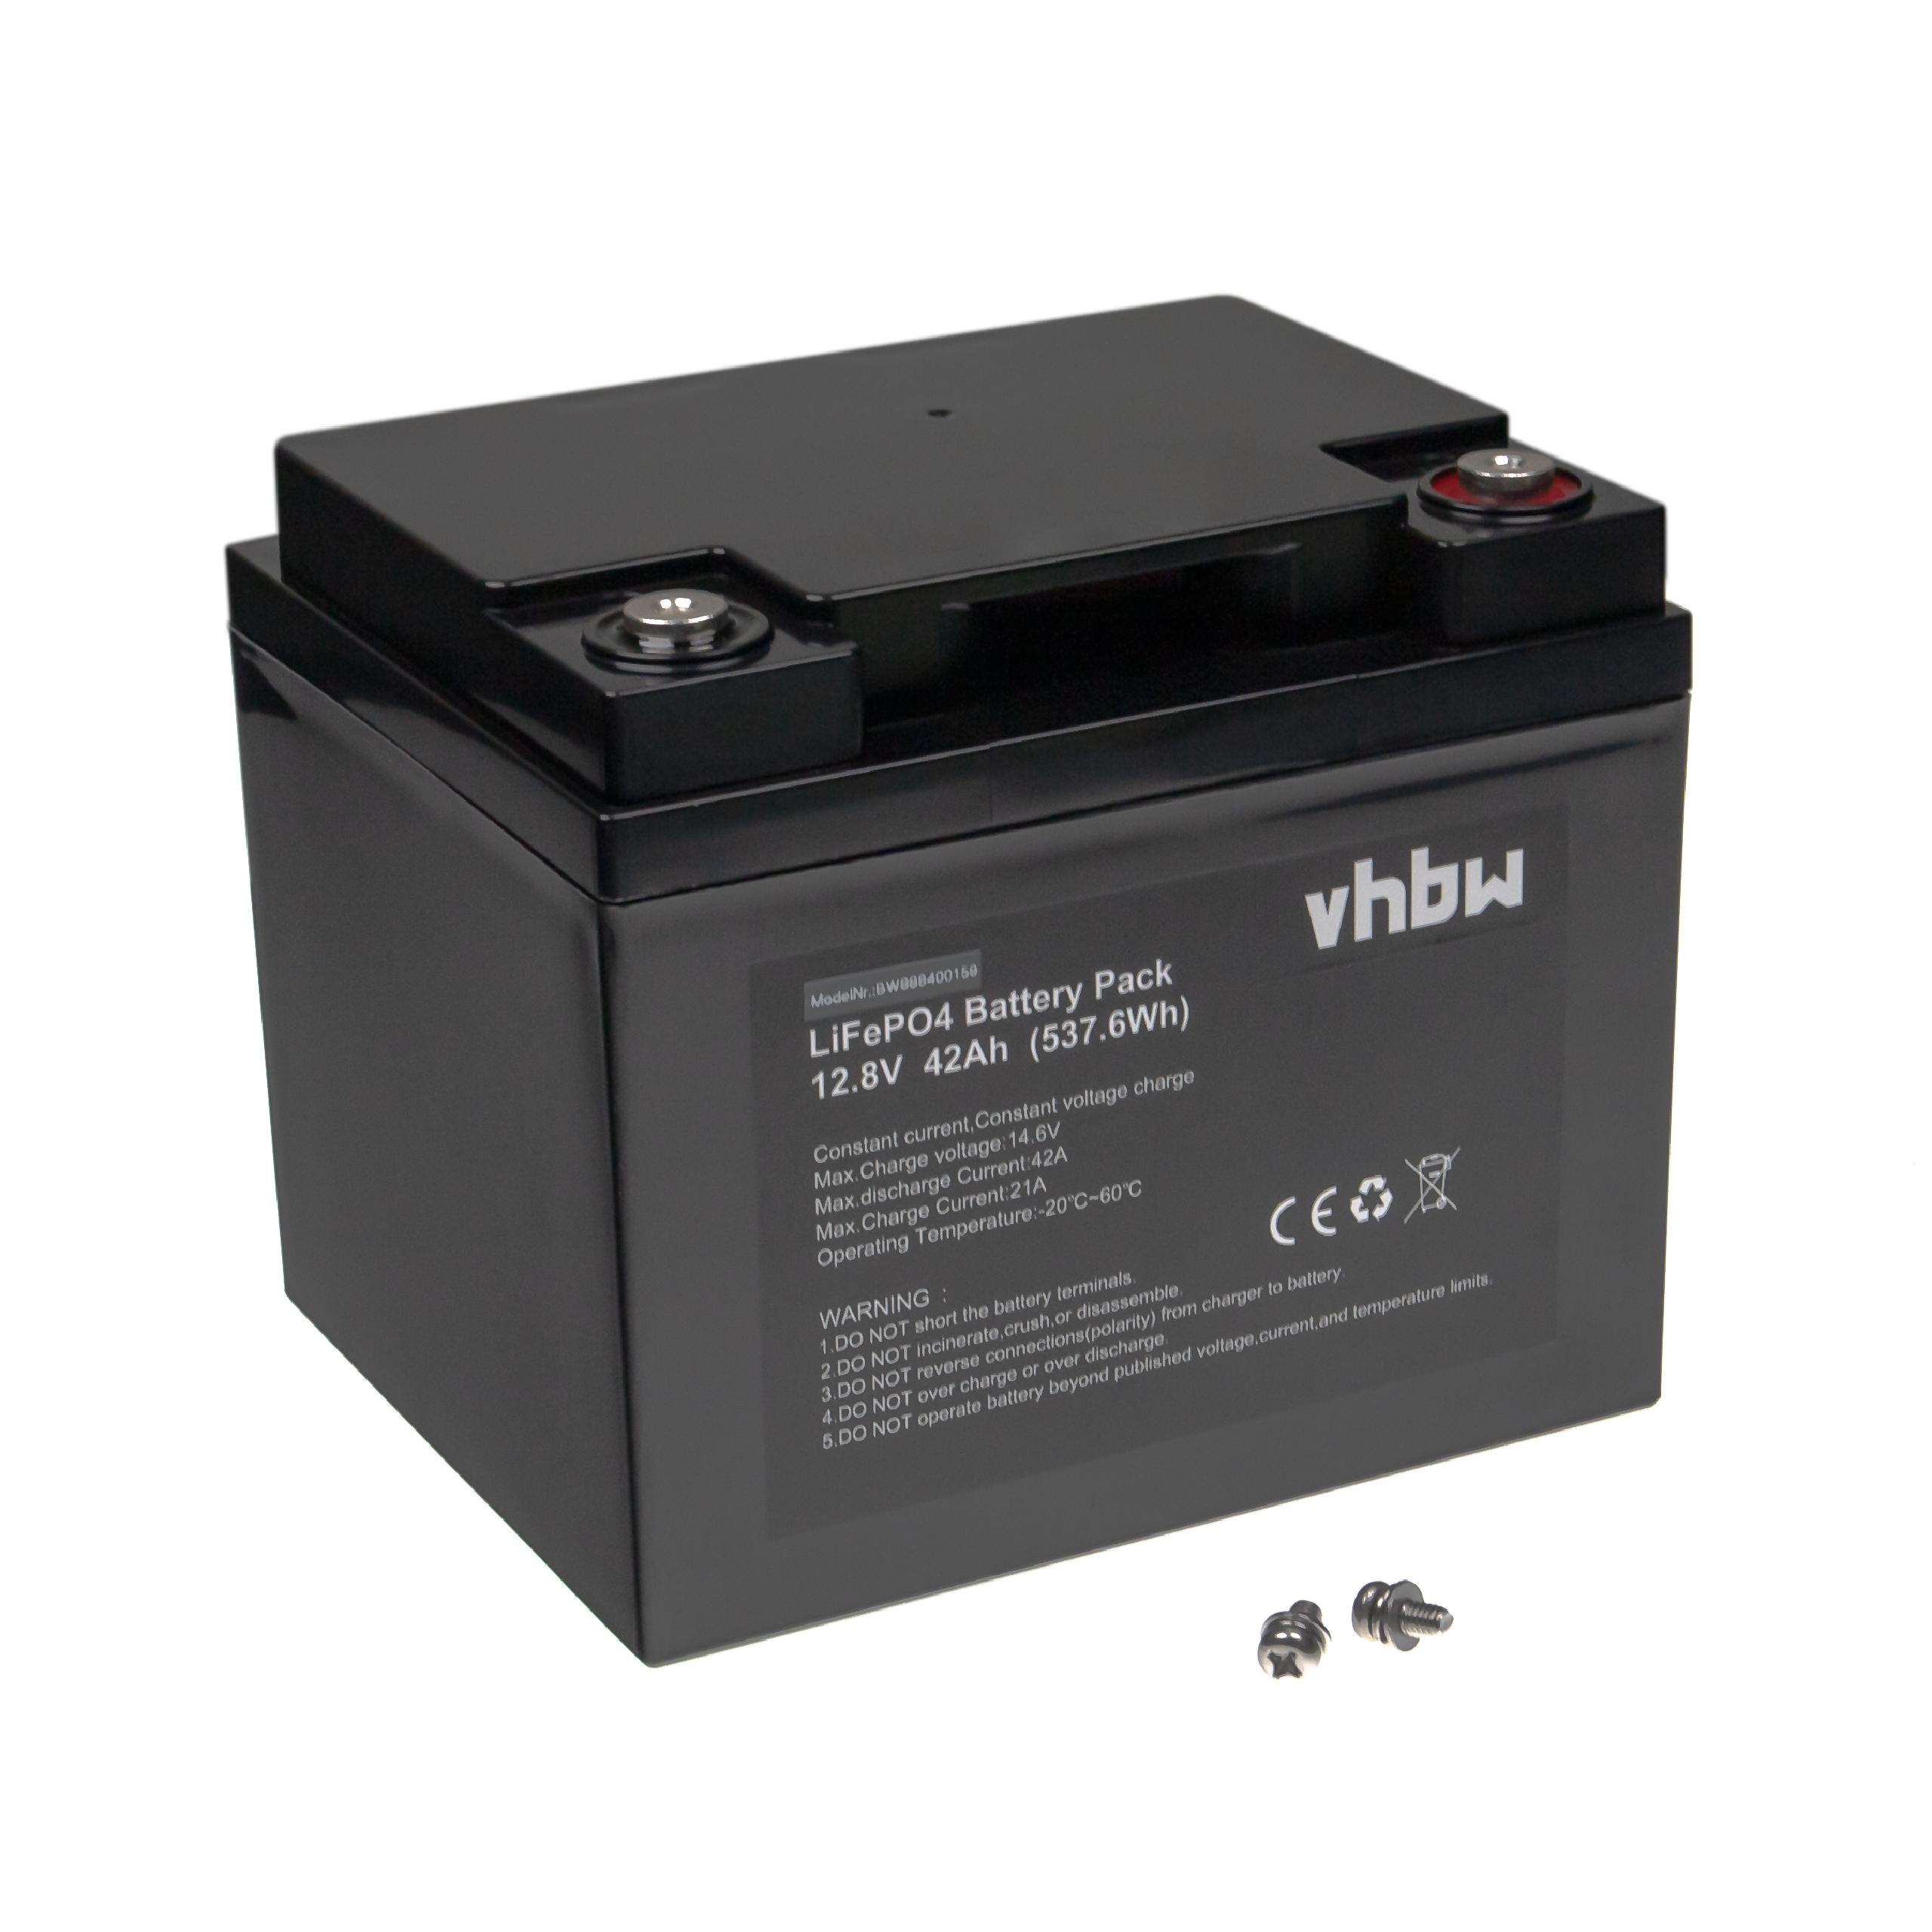 Bordbatterie Akku passend für Wohnmobil, Boot, Solaranlage - 42 Ah 12,8V LiFePO4, 42000mAh, schwarz